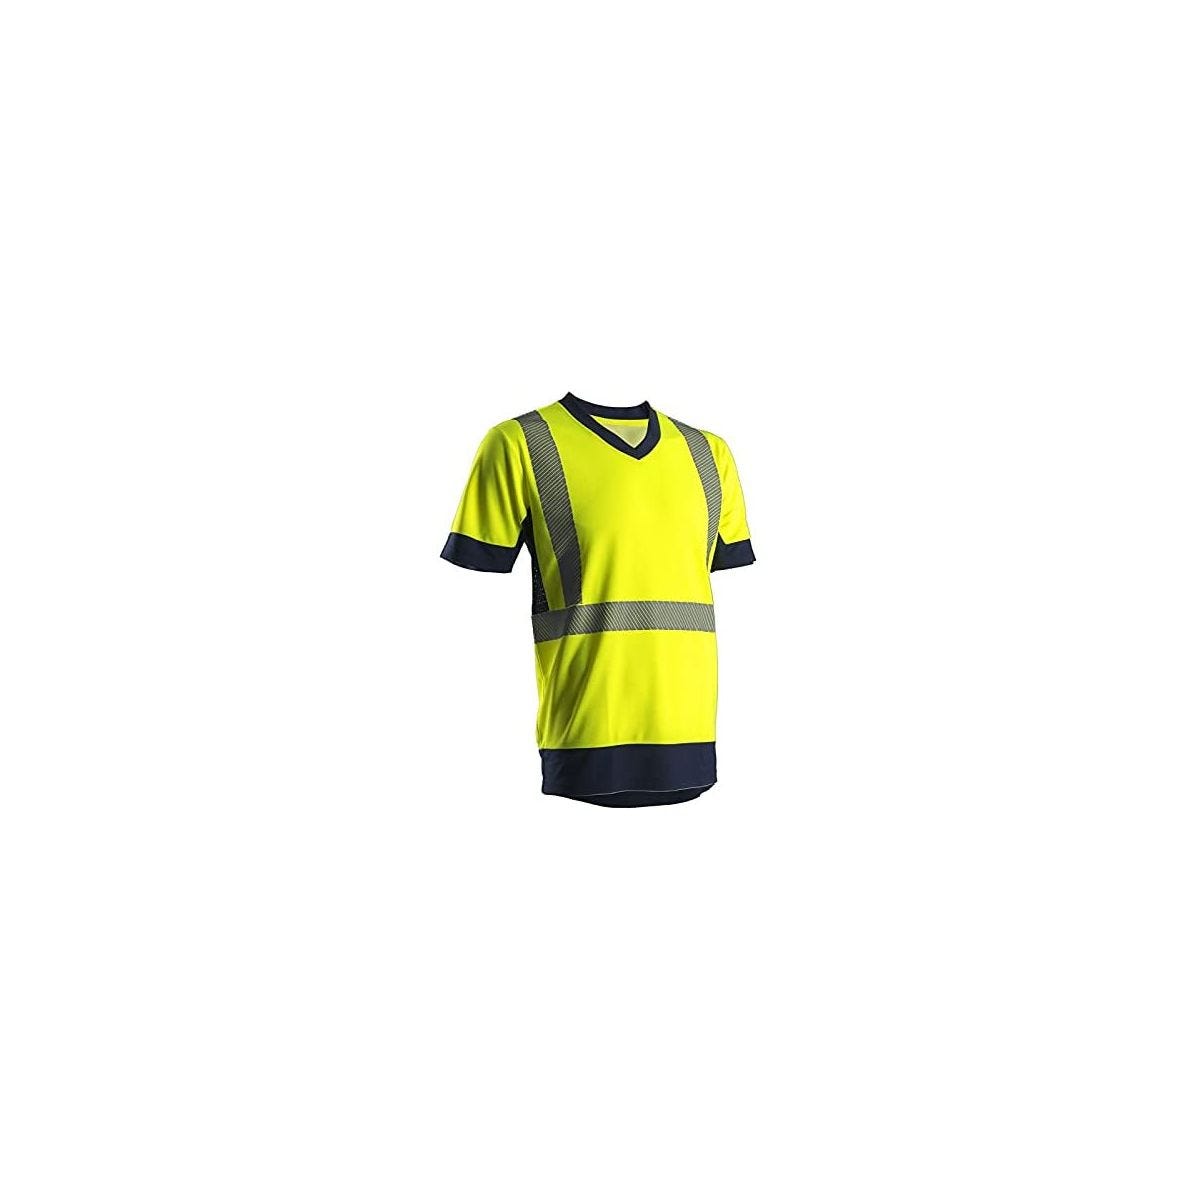 KYRIA T-shirt MC, jaune HV/marine, 100% polyester, 140g/m² - COVERGUARD - Taille 2XL 0